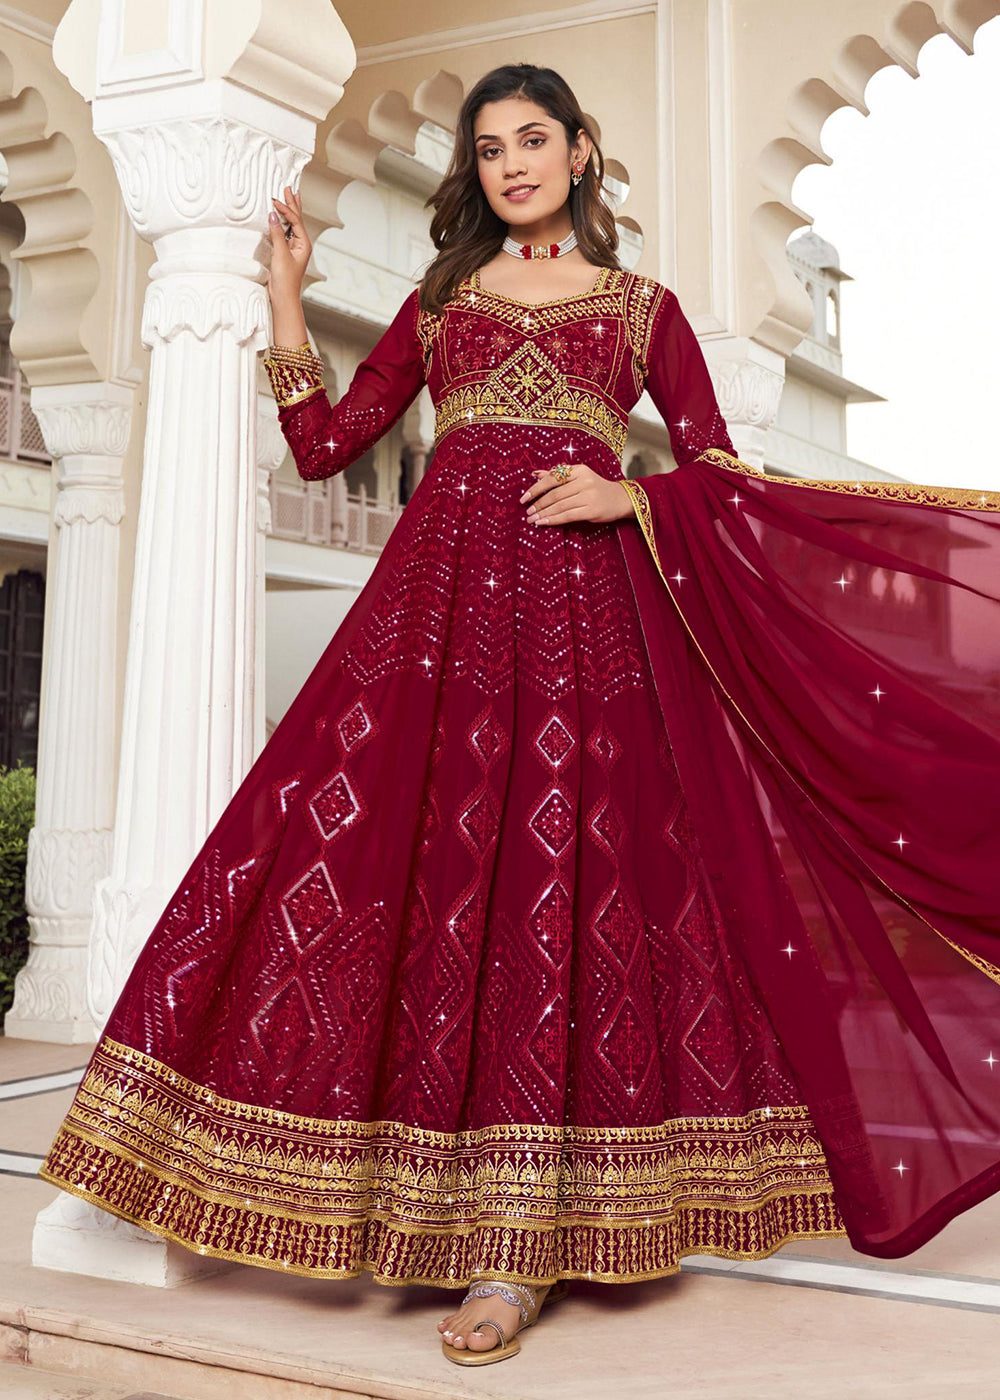 Buy Now Floor Length Appealing Hot Pink Wedding Wear Anarkali Suit Online in USA, UK, Australia, New Zealand, Canada, Italy & Worldwide at Empress Clothing.